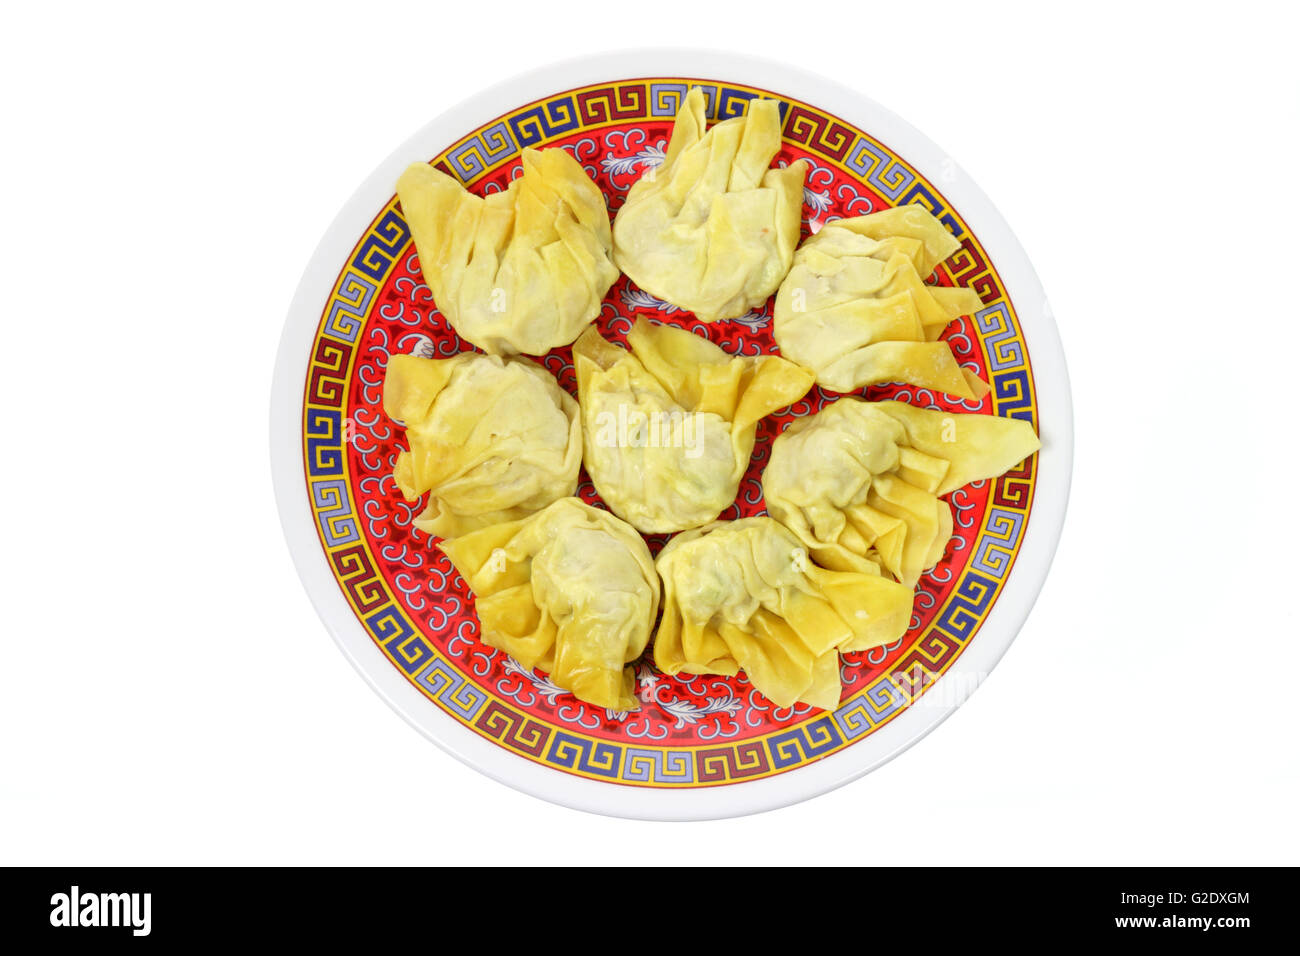 Plate of Chinese Dumplings Stock Photo